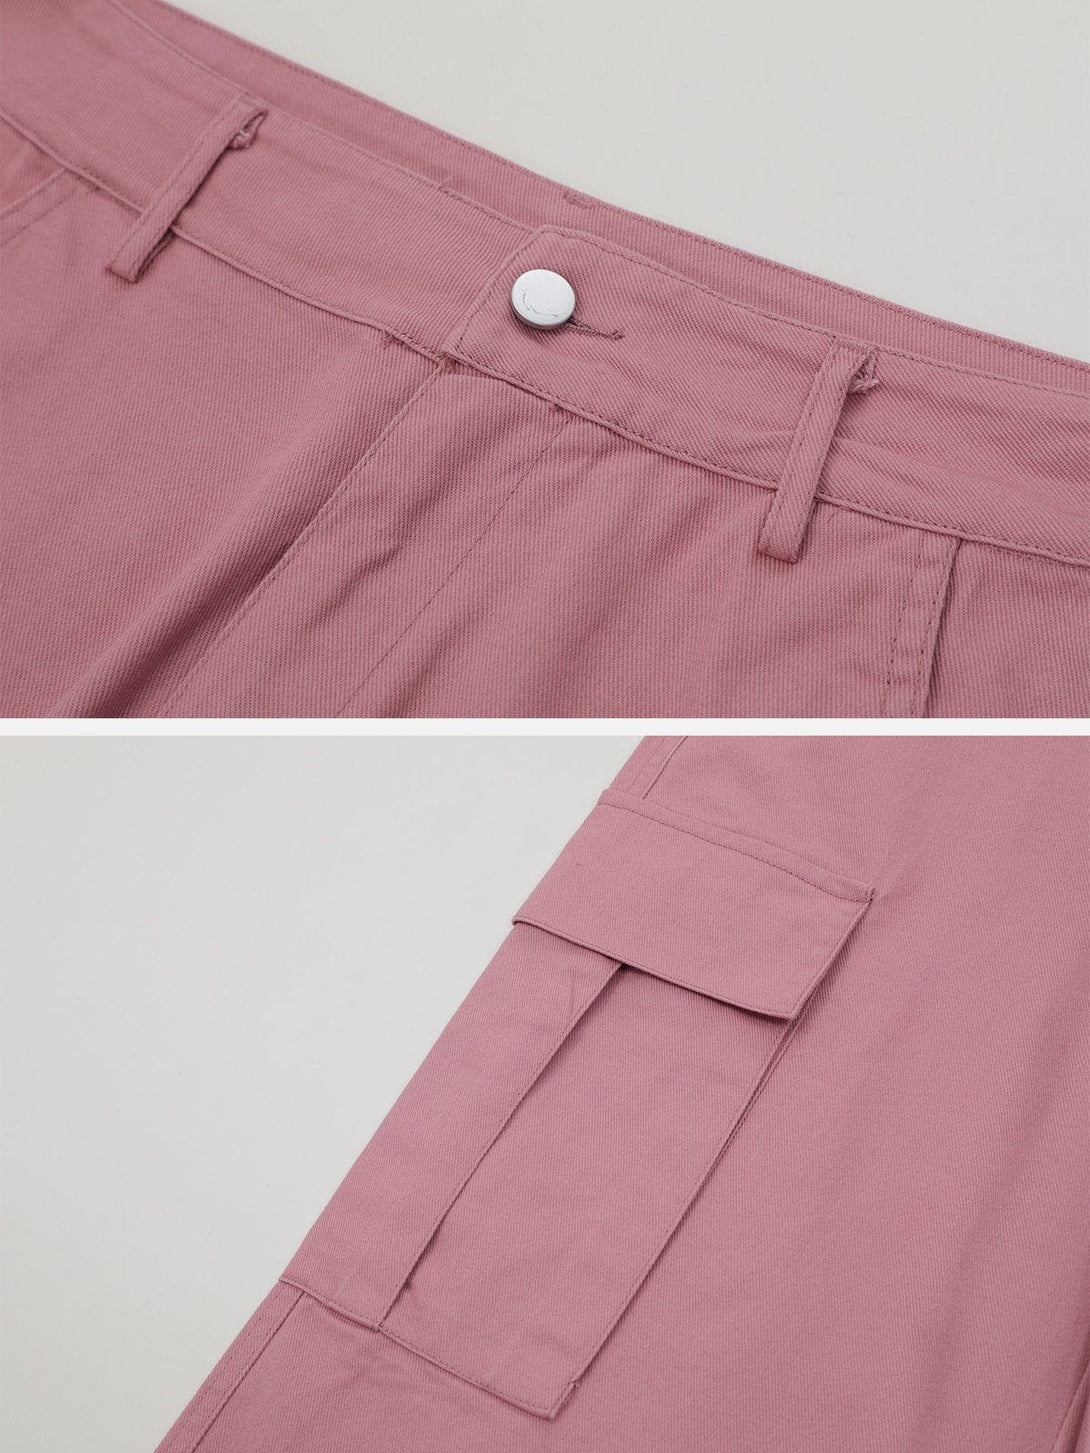 Levefly - Multi-Pocket Split Pants - Streetwear Fashion - levefly.com